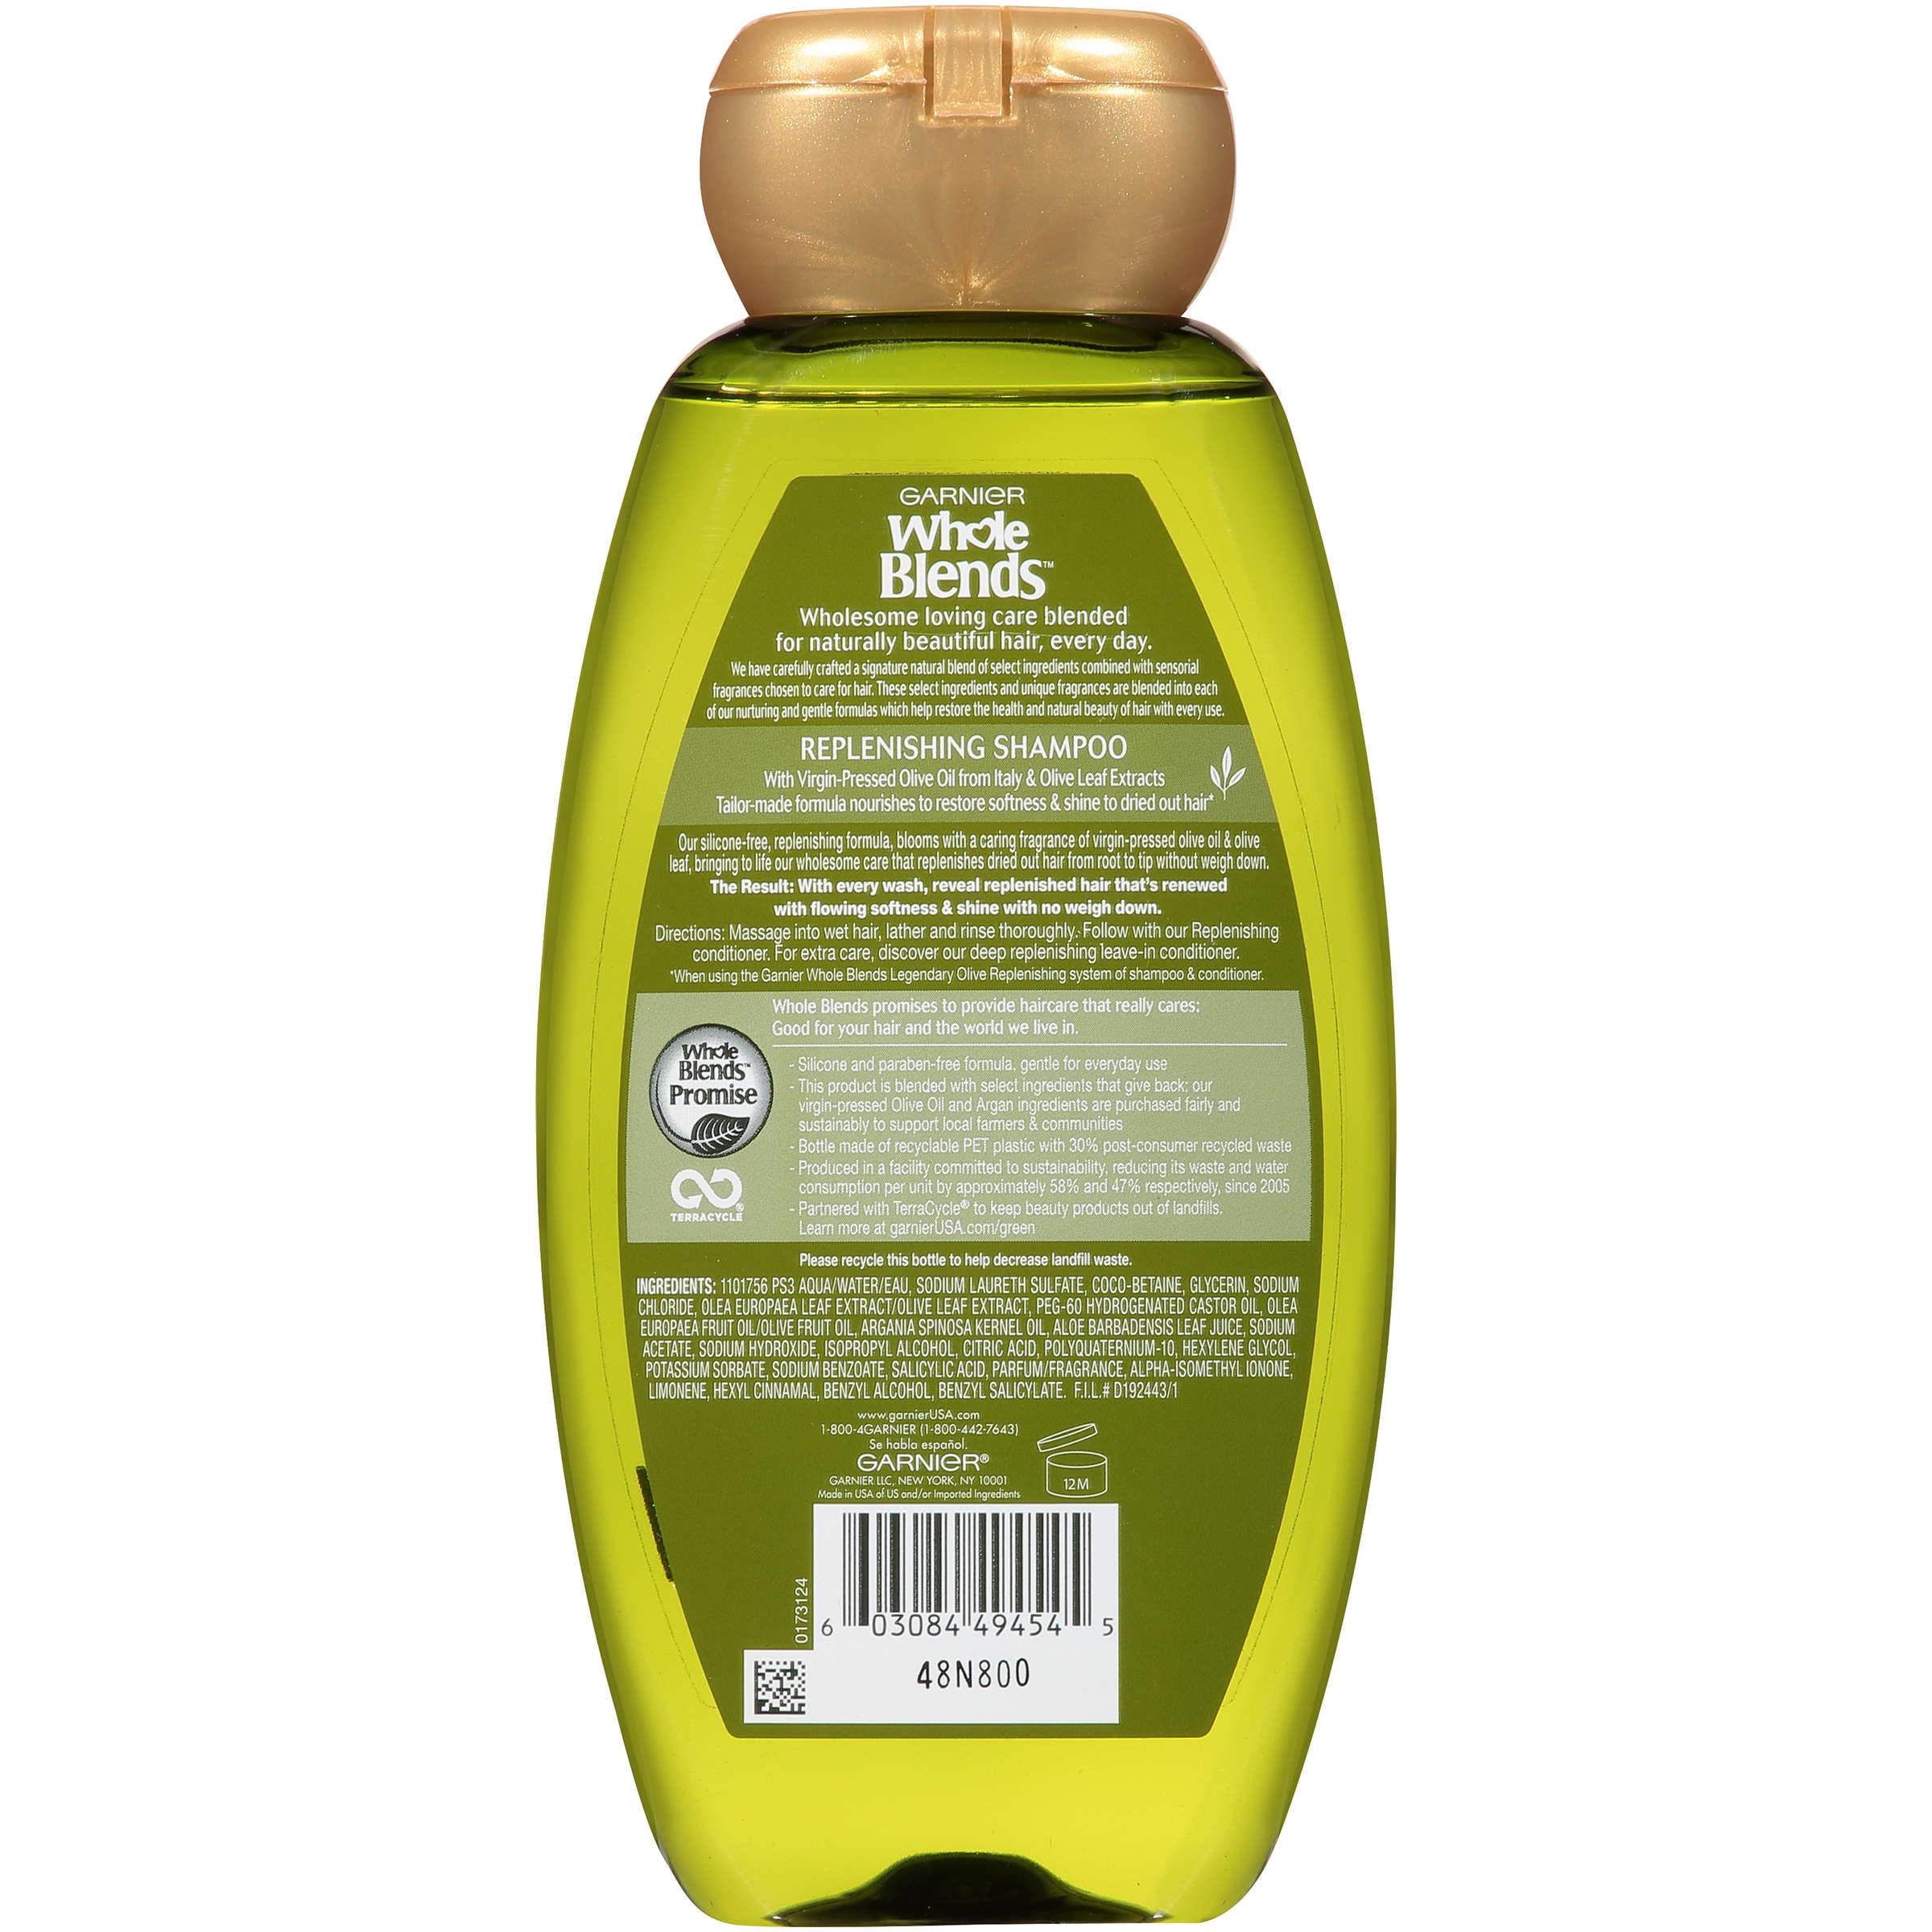 Garnier Blends Replenishing Shampoo Legendary Olive, Hair, fl. oz. - Walmart.com